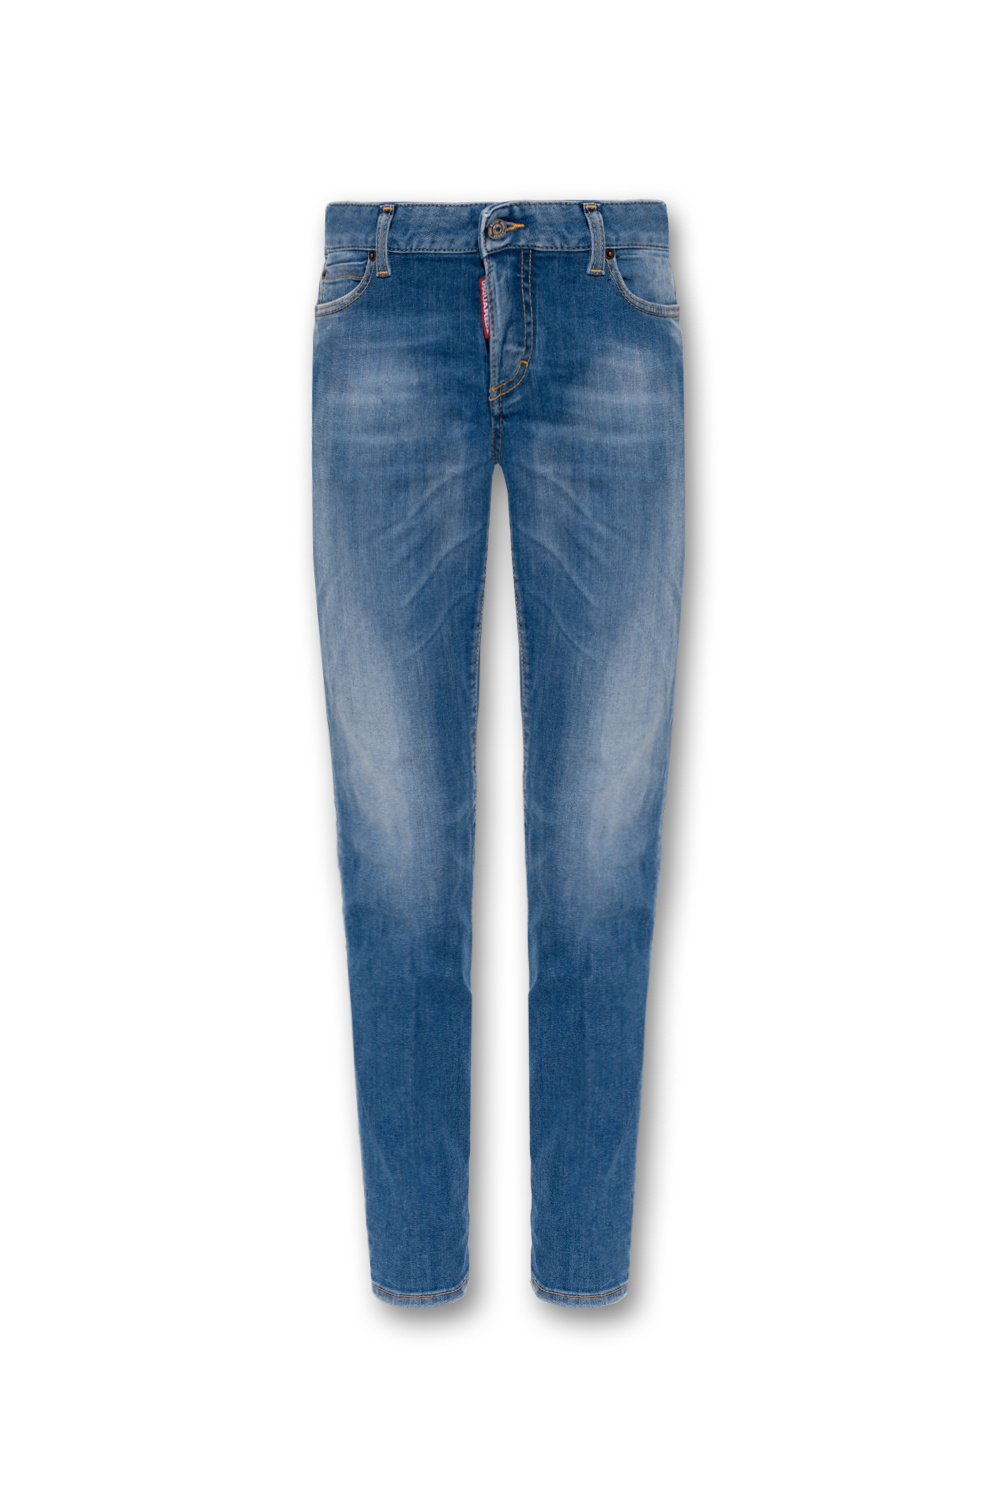 Dsquared2 ‘Jennifer Jean’ jeans